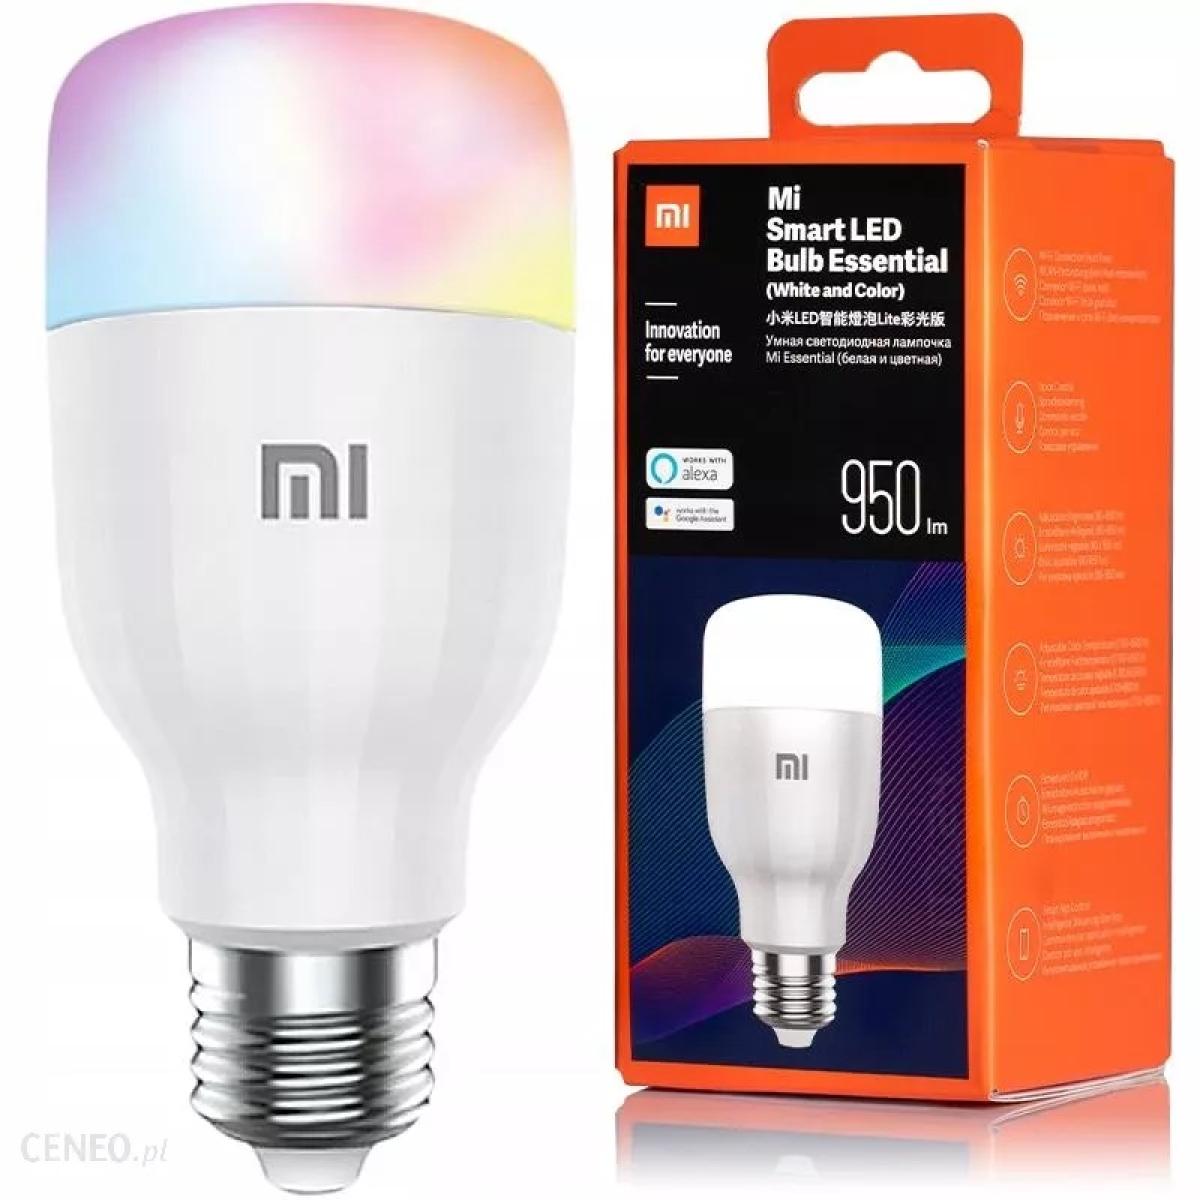 MI Smart Led Bulb Essential 950Lm